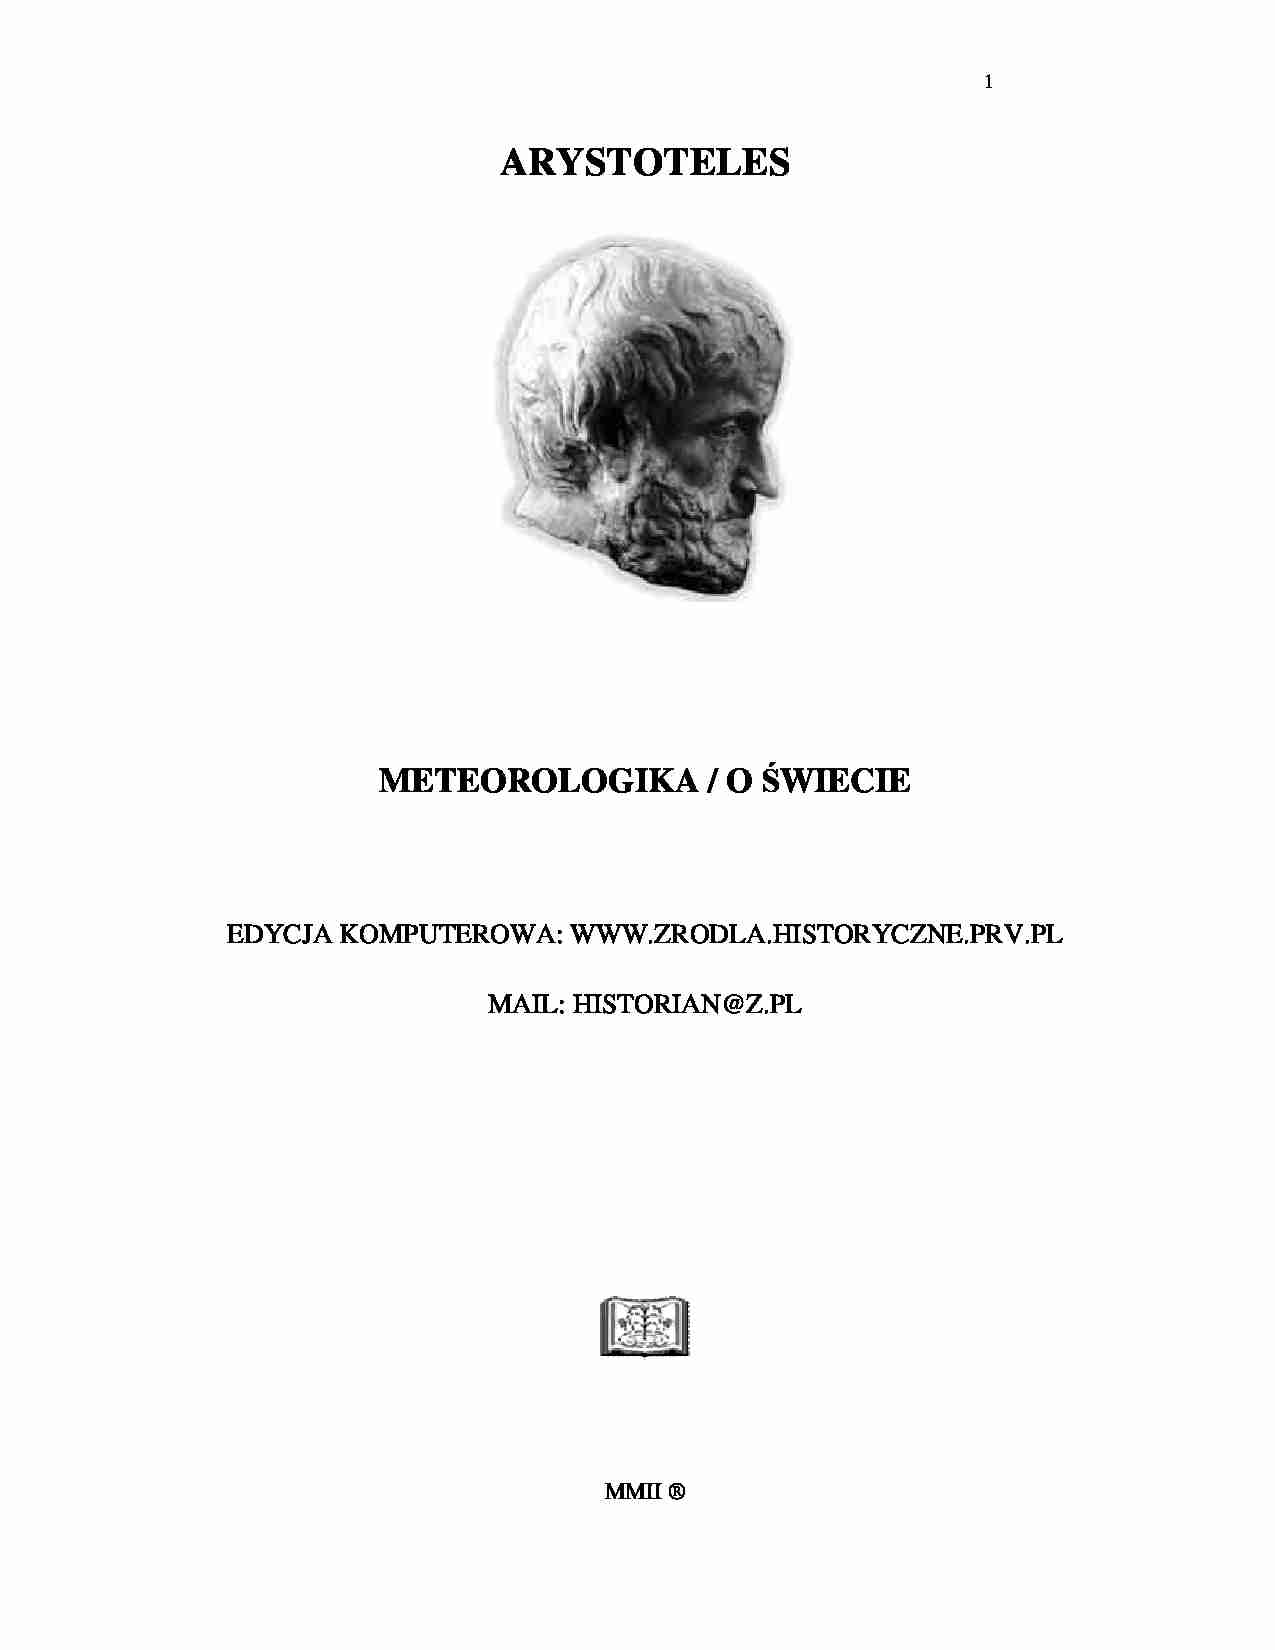 Arystoteles - Meteorologika O ?wiecie - strona 1